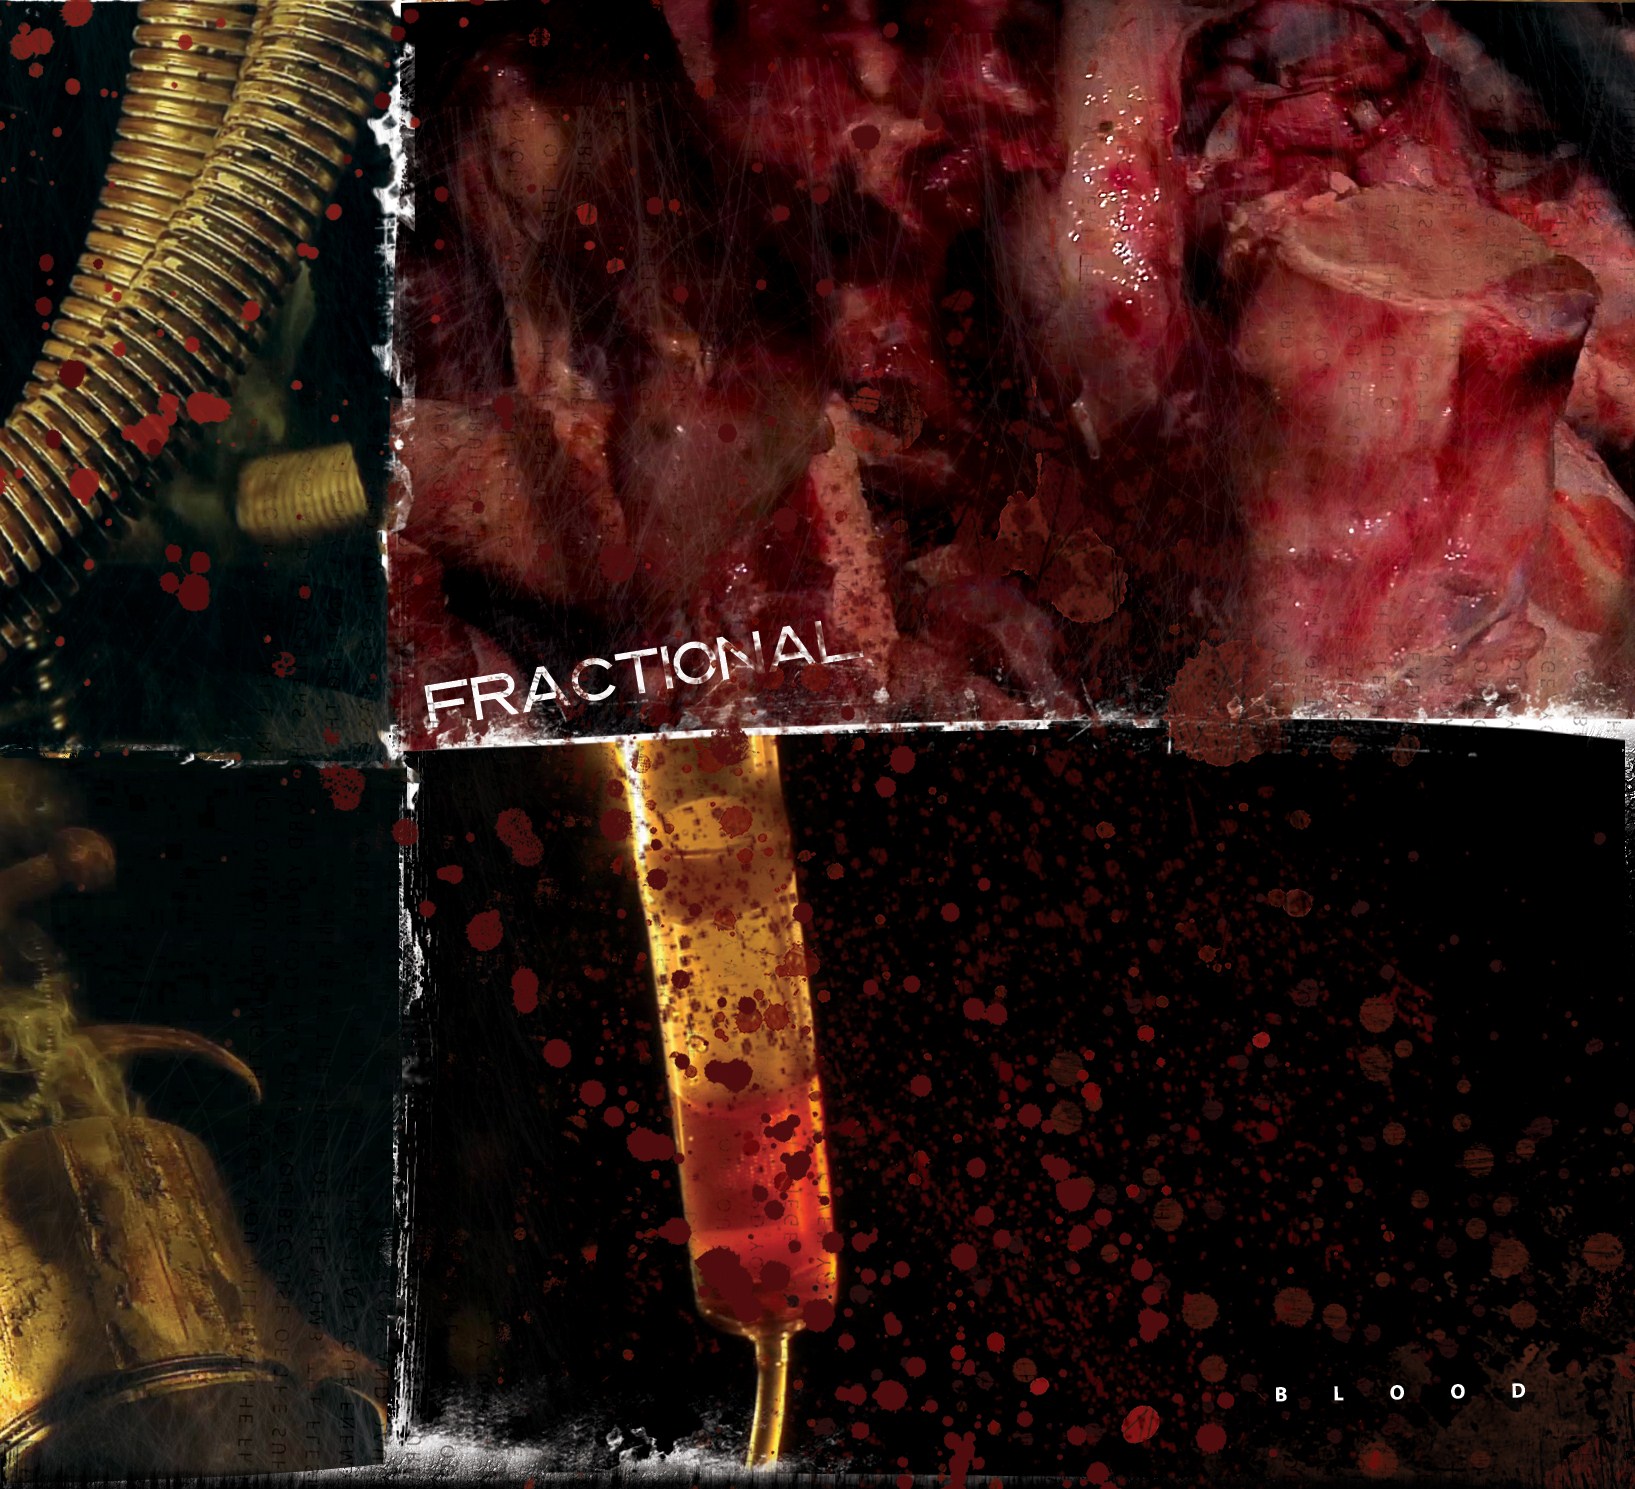 Fractional - Blood / CD